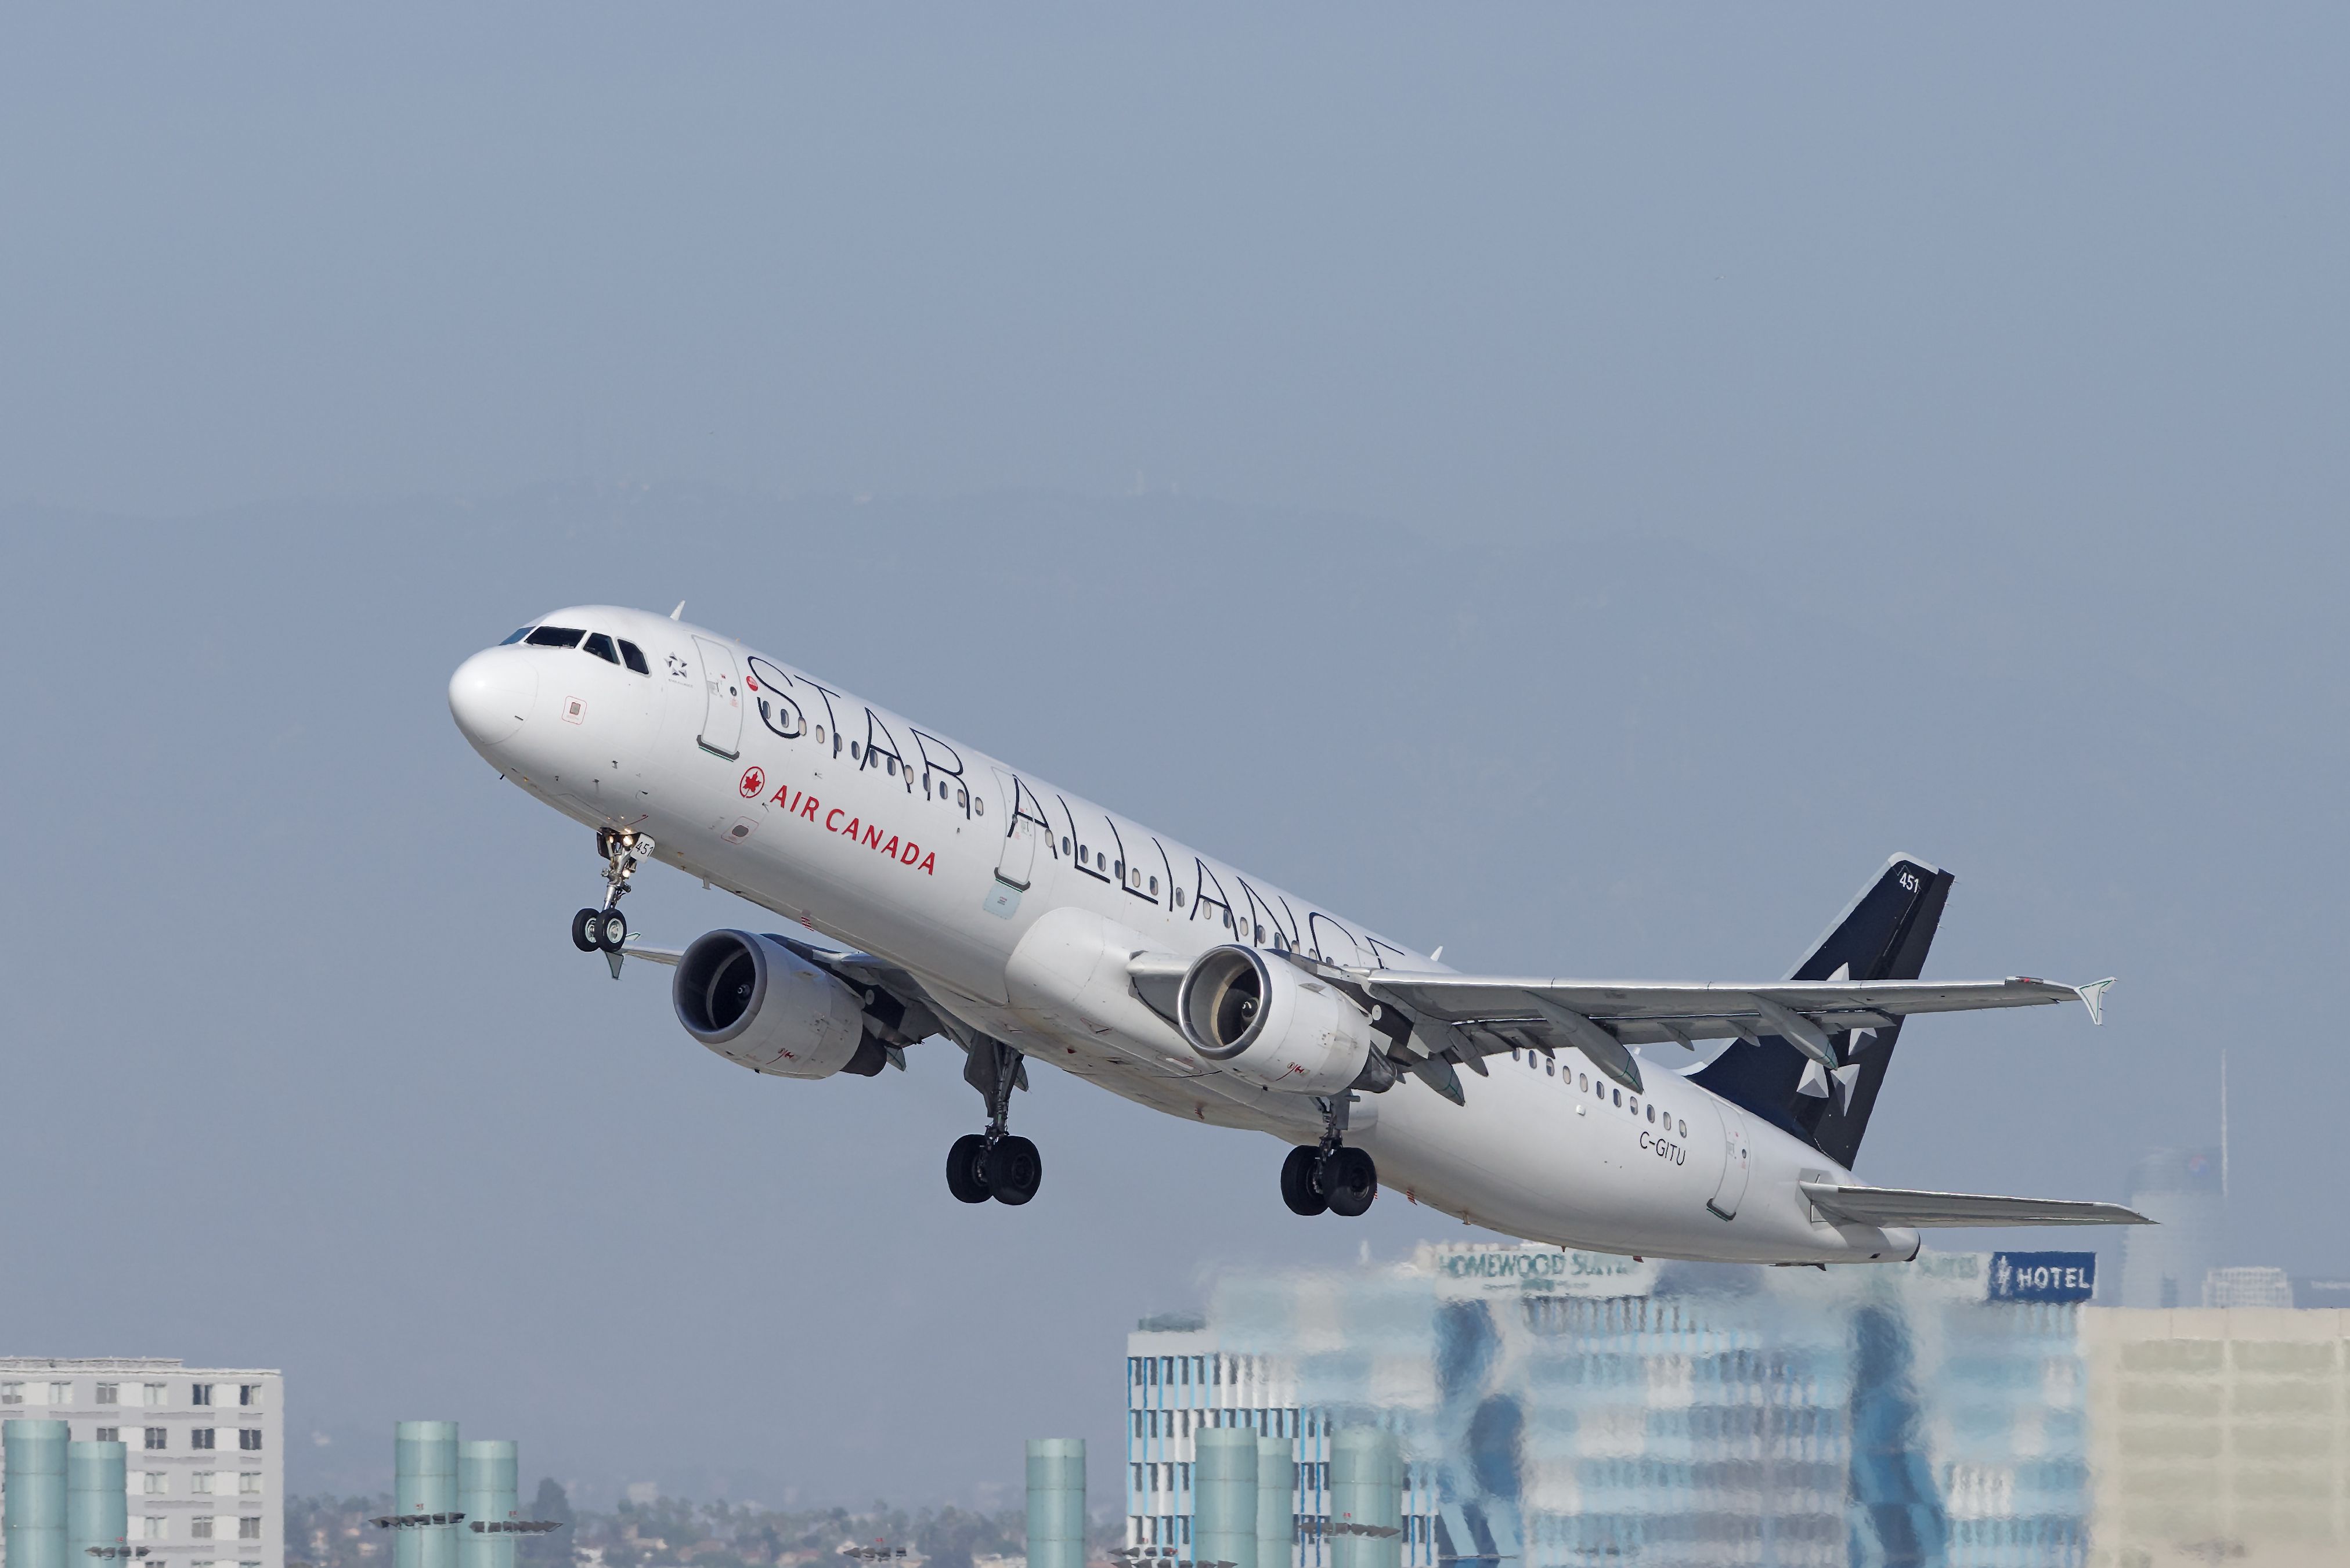 Air Canada Airbus A321 (Star Alliance) taking off. 